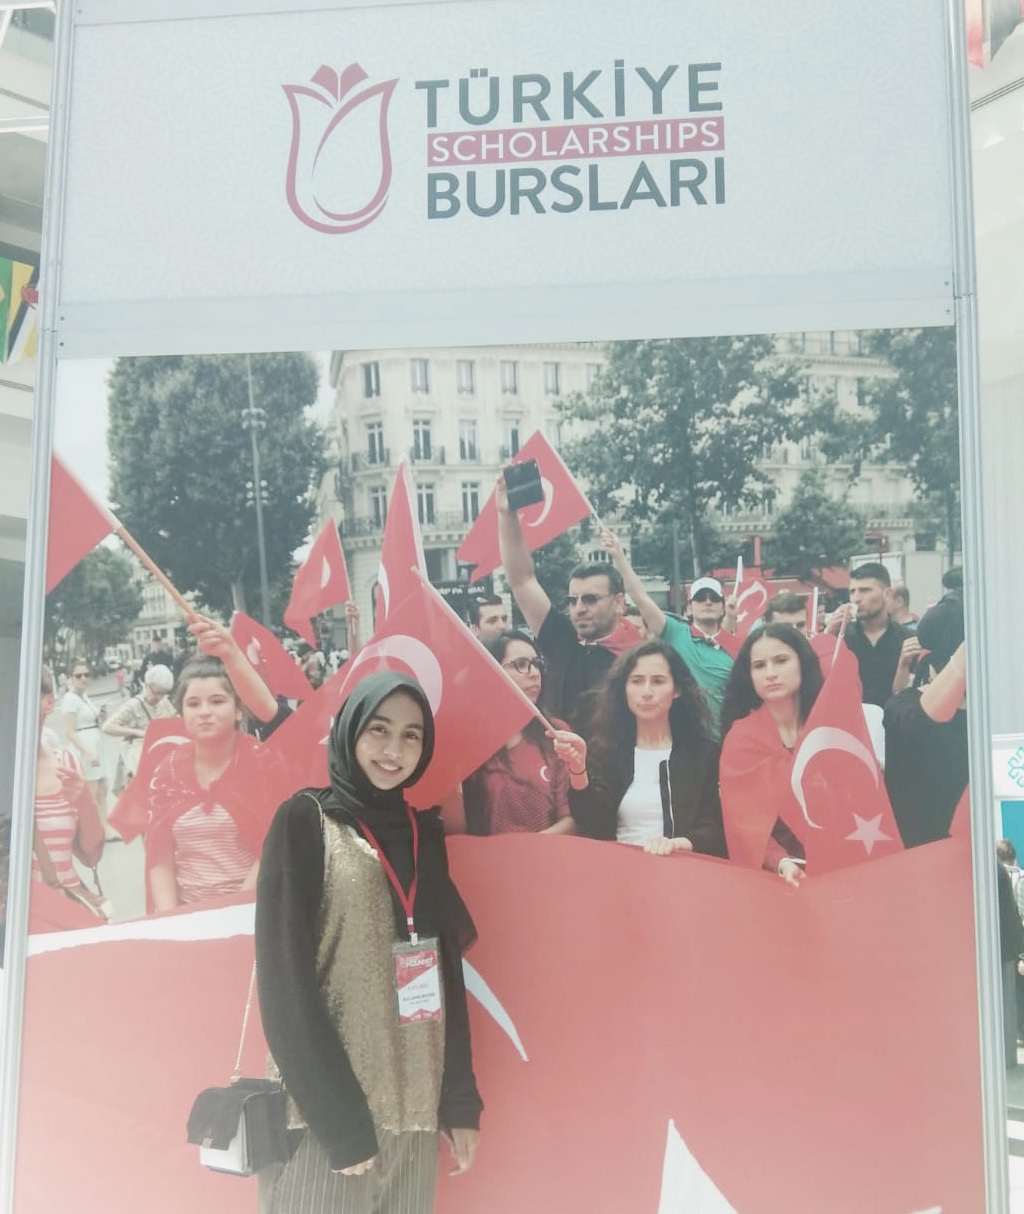 Beasiswa Turkiye Burslari 2020